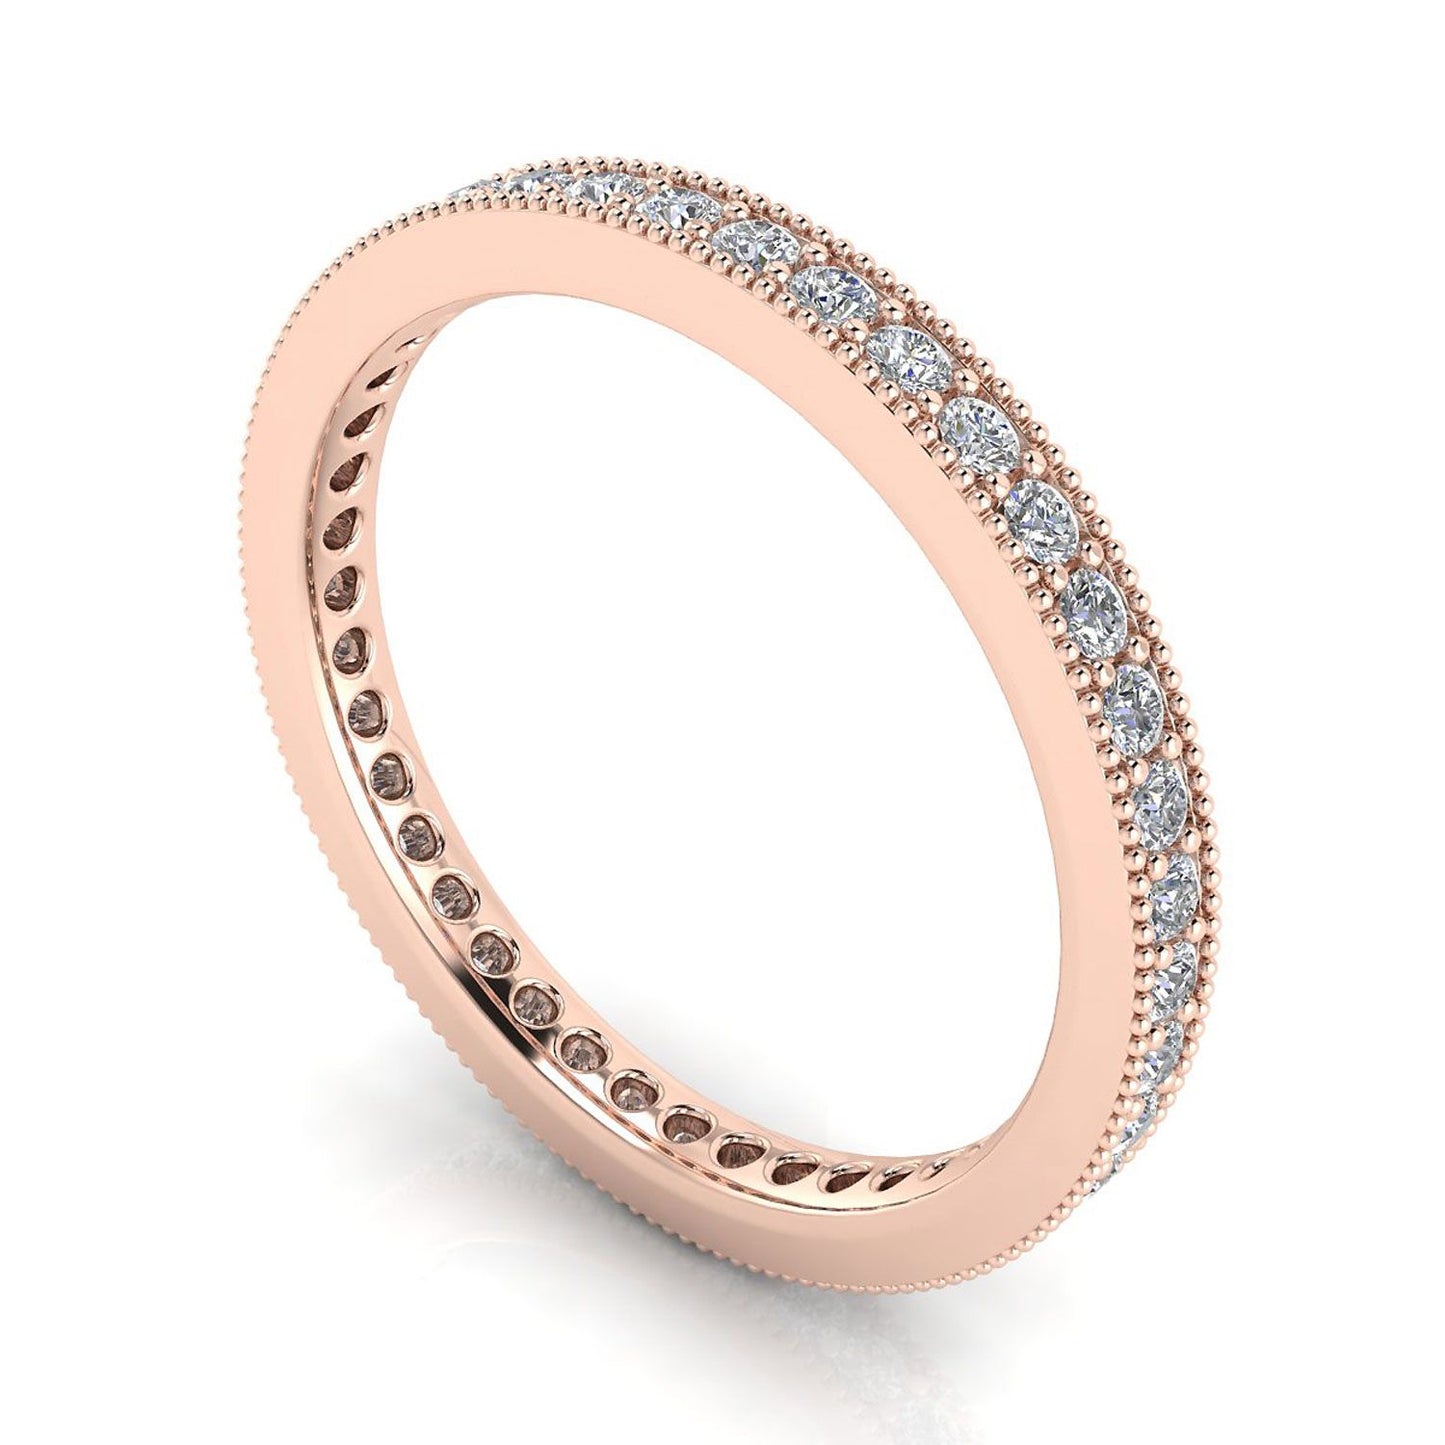 Round Brilliant Cut Diamond Pave & Milgrain Set Eternity Ring In 14k Rose Gold  (0.36ct. Tw.) Ring Size 9